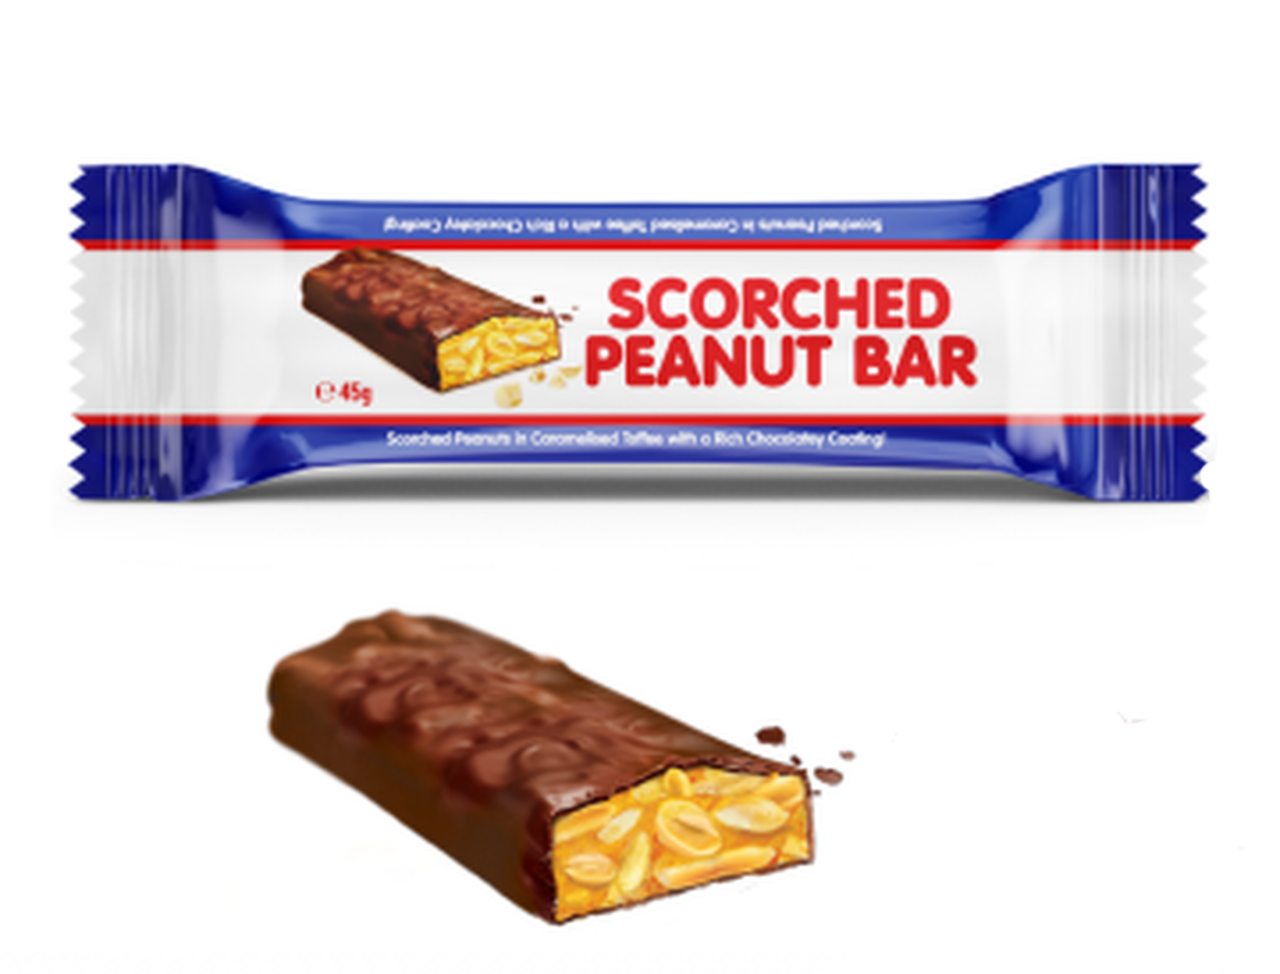 Scorched Peanut Bar - 45g